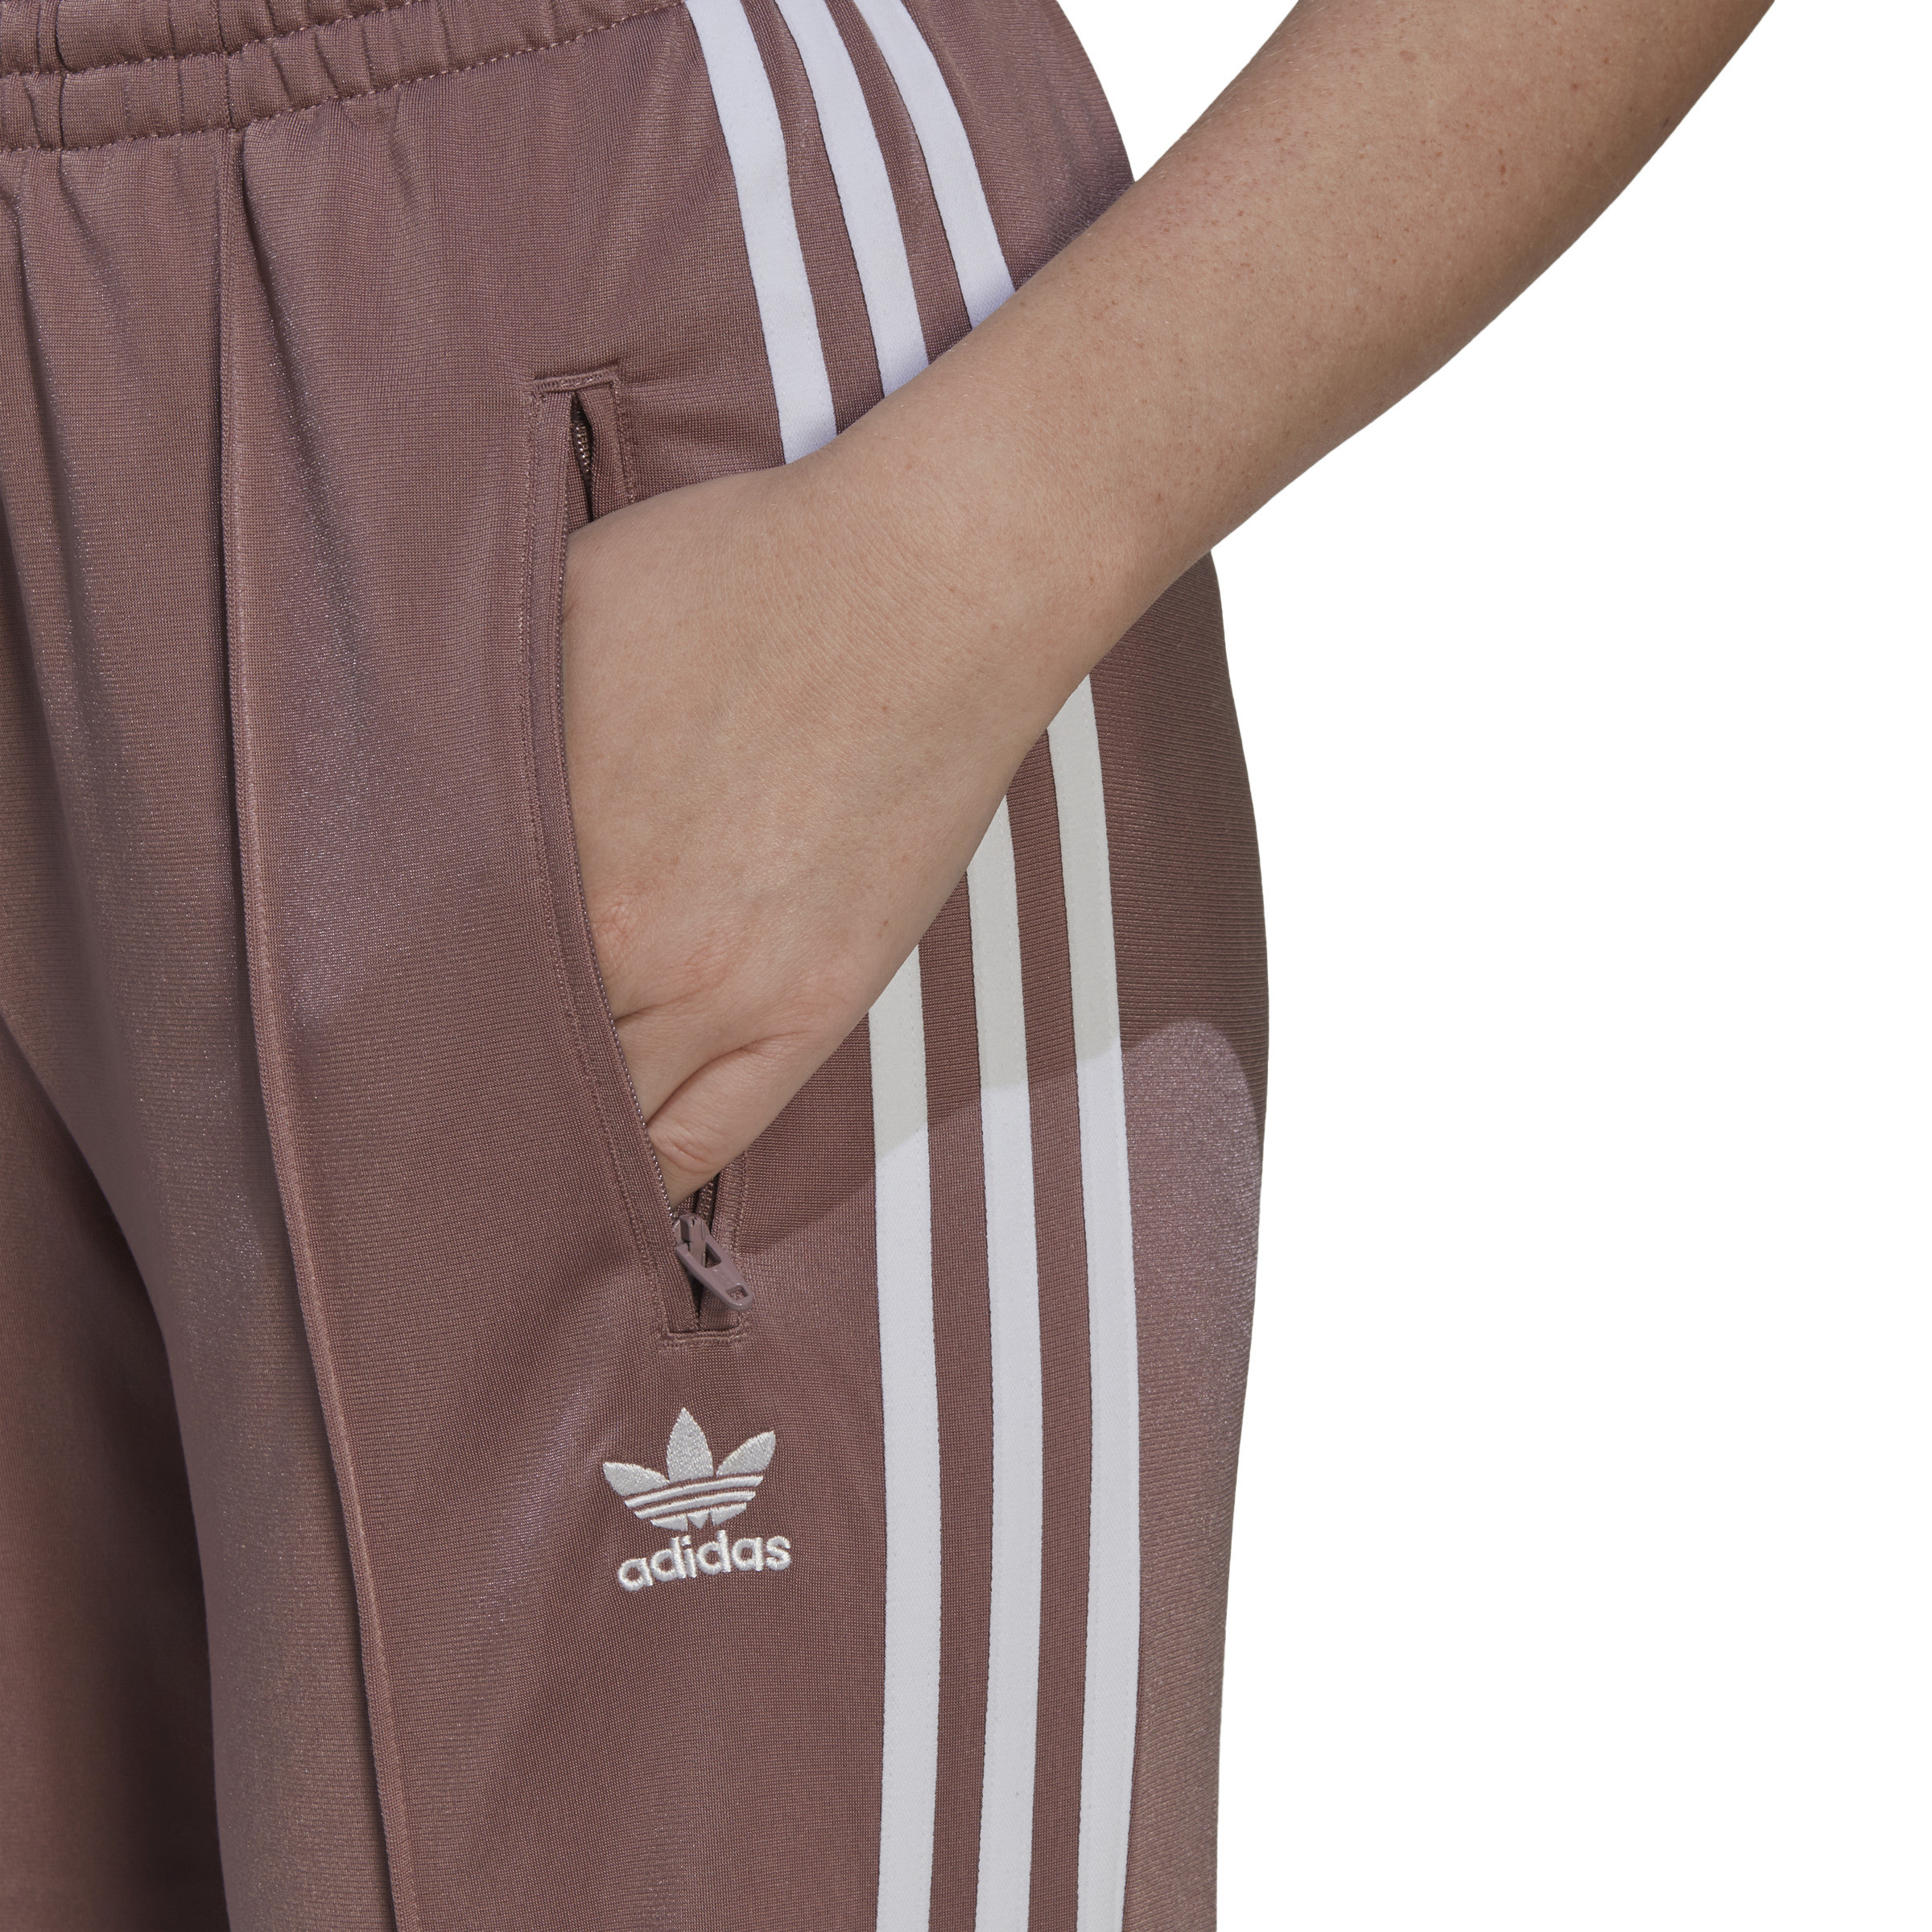 Adidas - Pantalone sportivo adicolor, Rosa antico, large image number 2